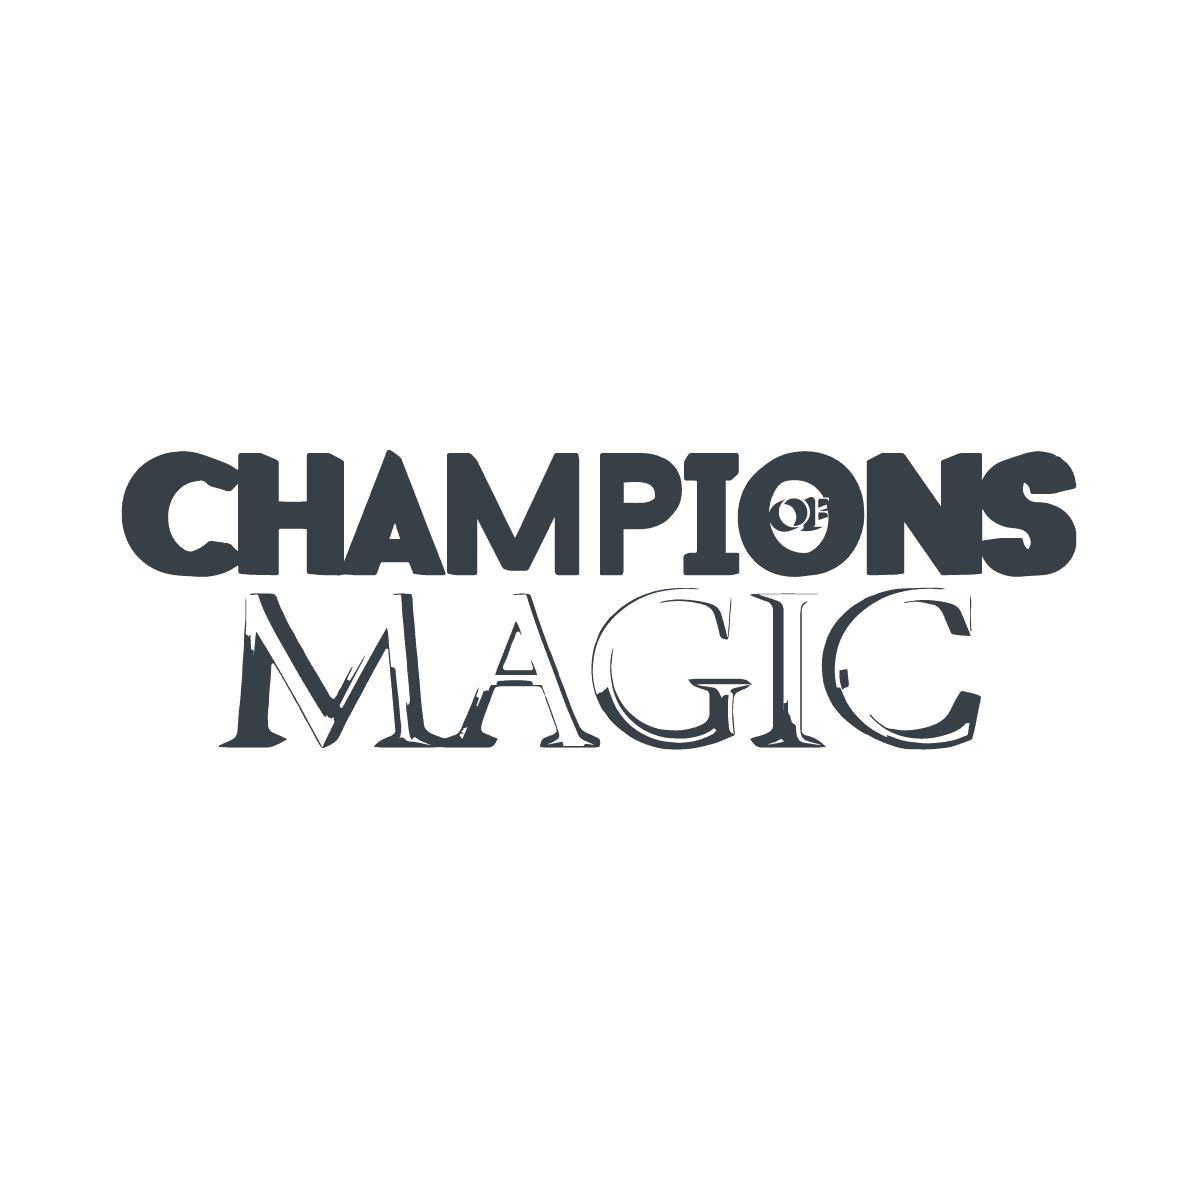 Champions of Magic logo